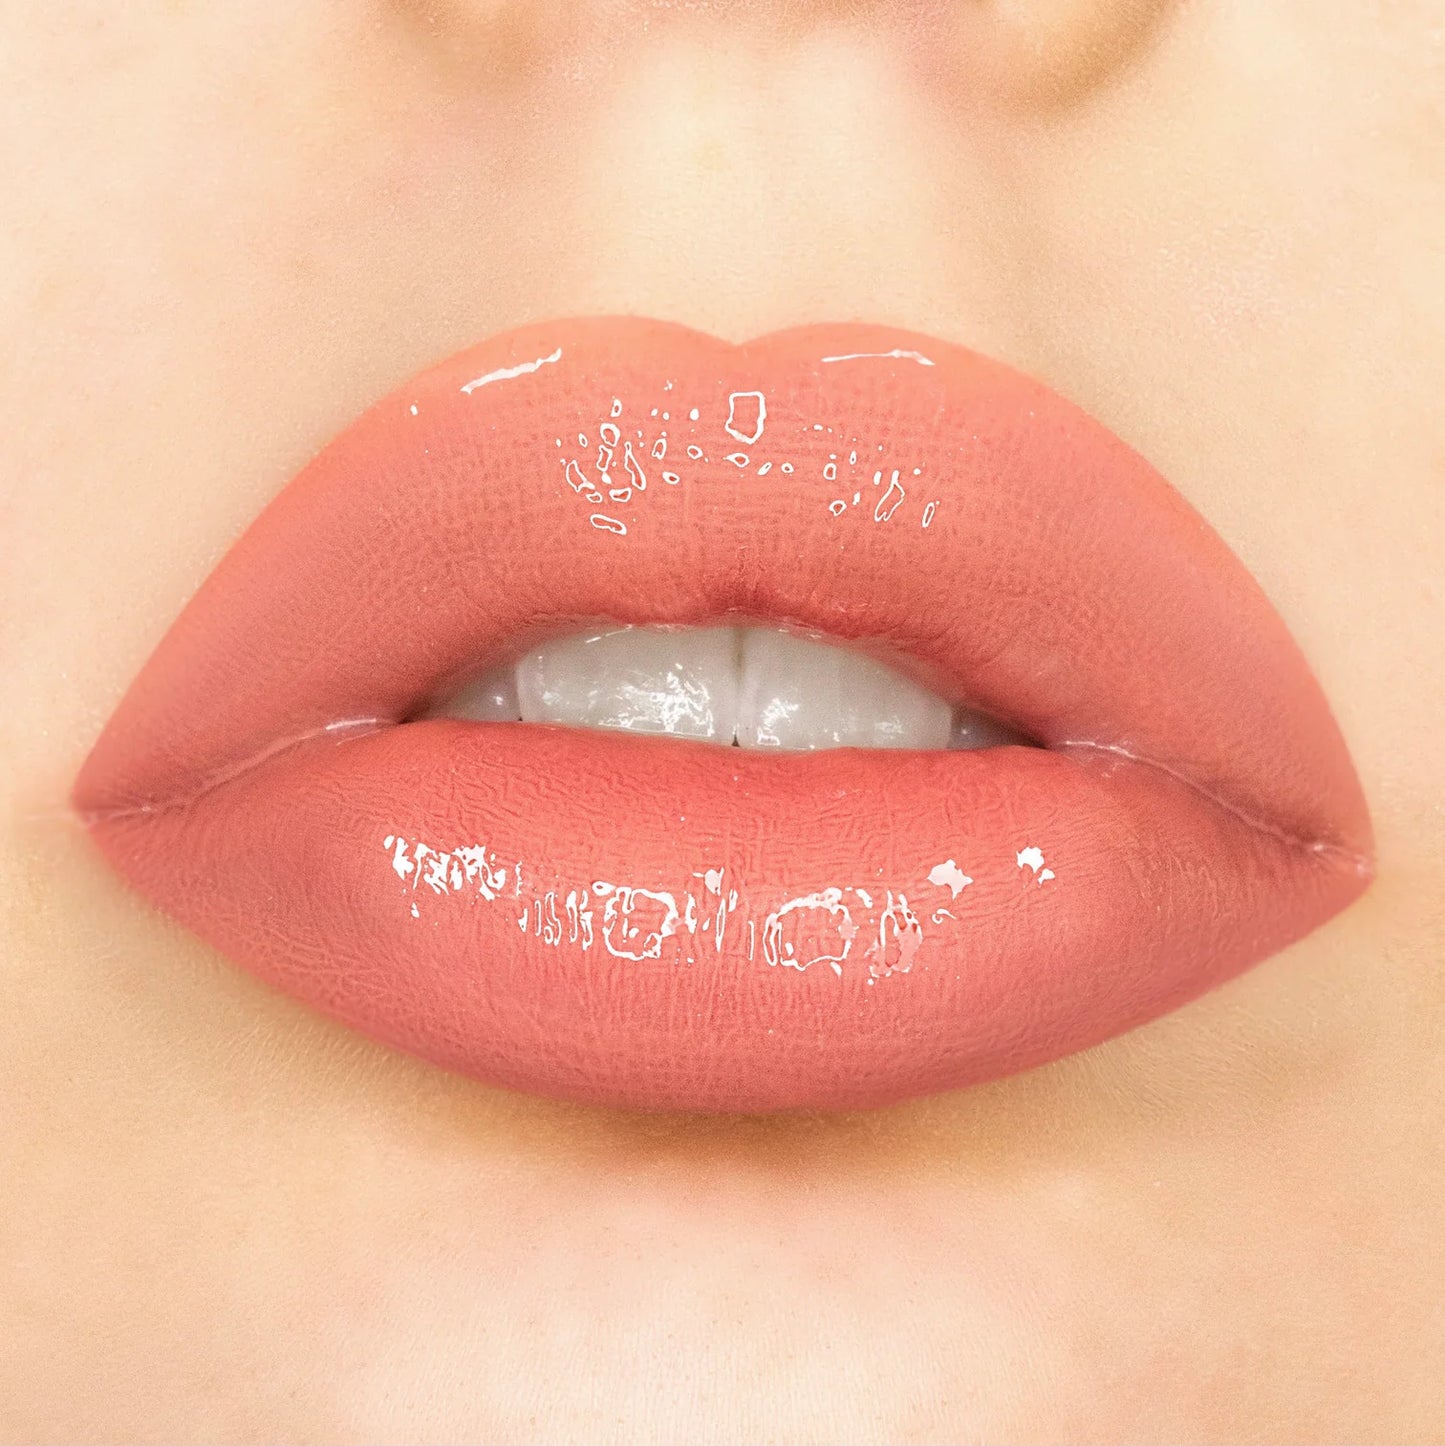 Slekky Kiss plump lip gloss